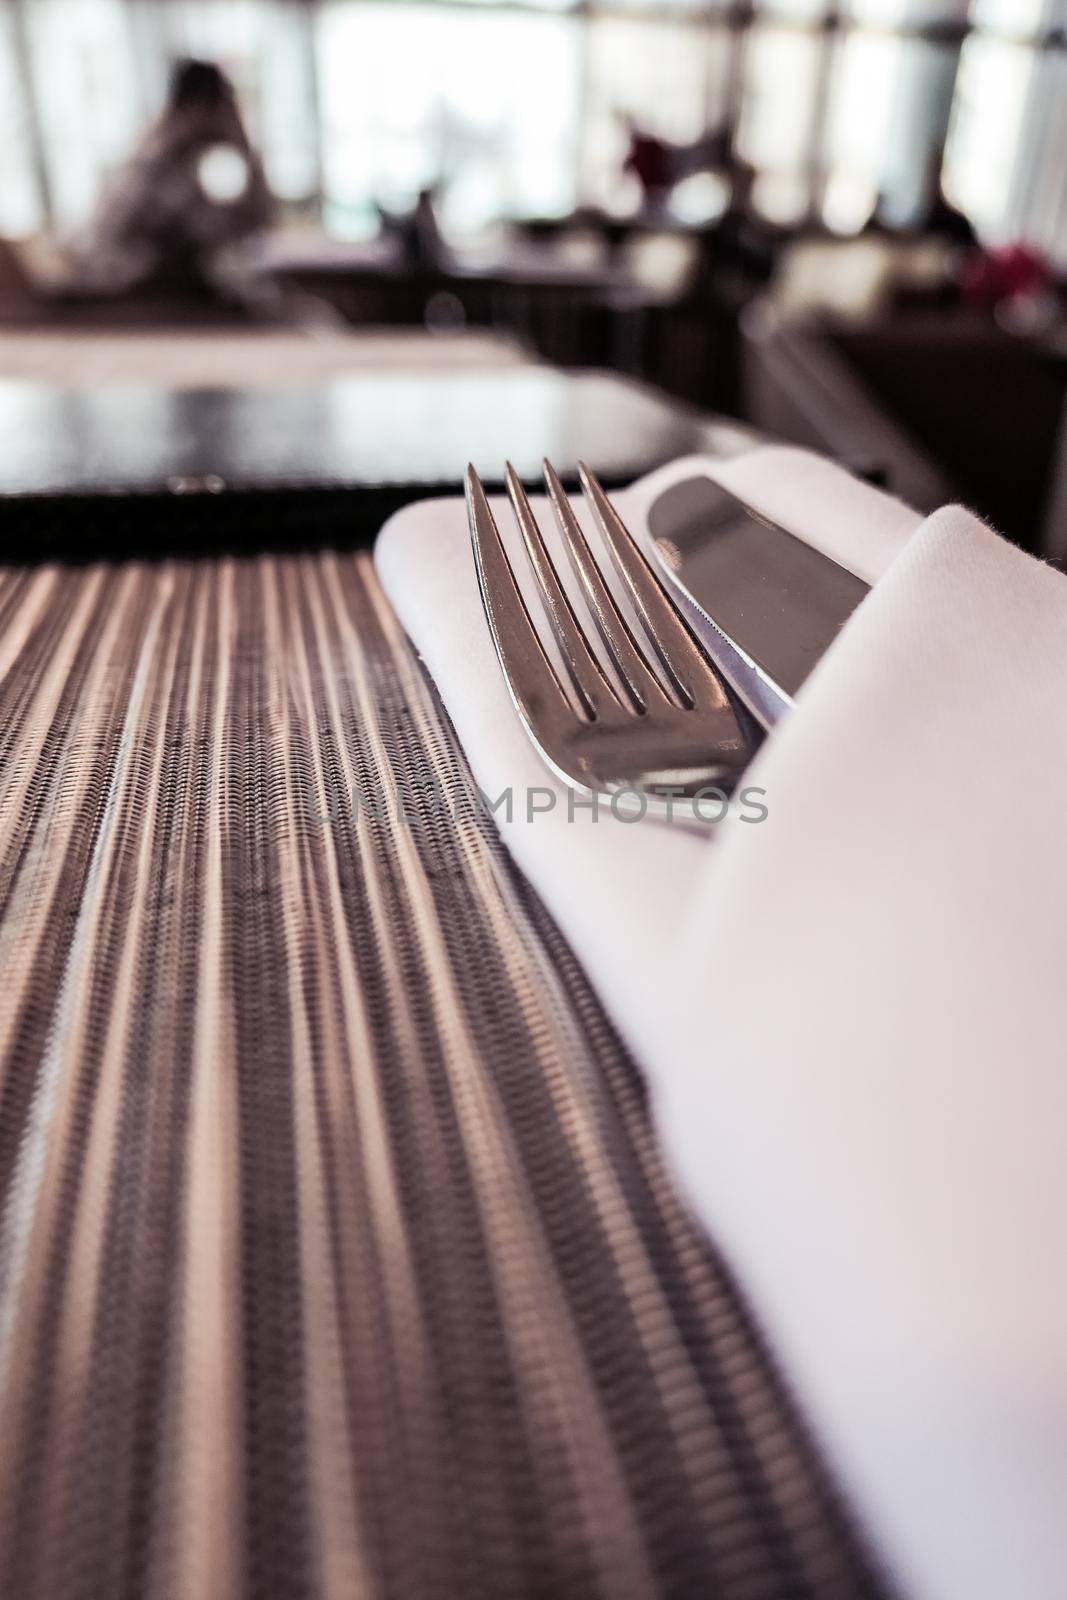 Celebration event, interior design and luxury service concept - Restaurant table setting, classic decor